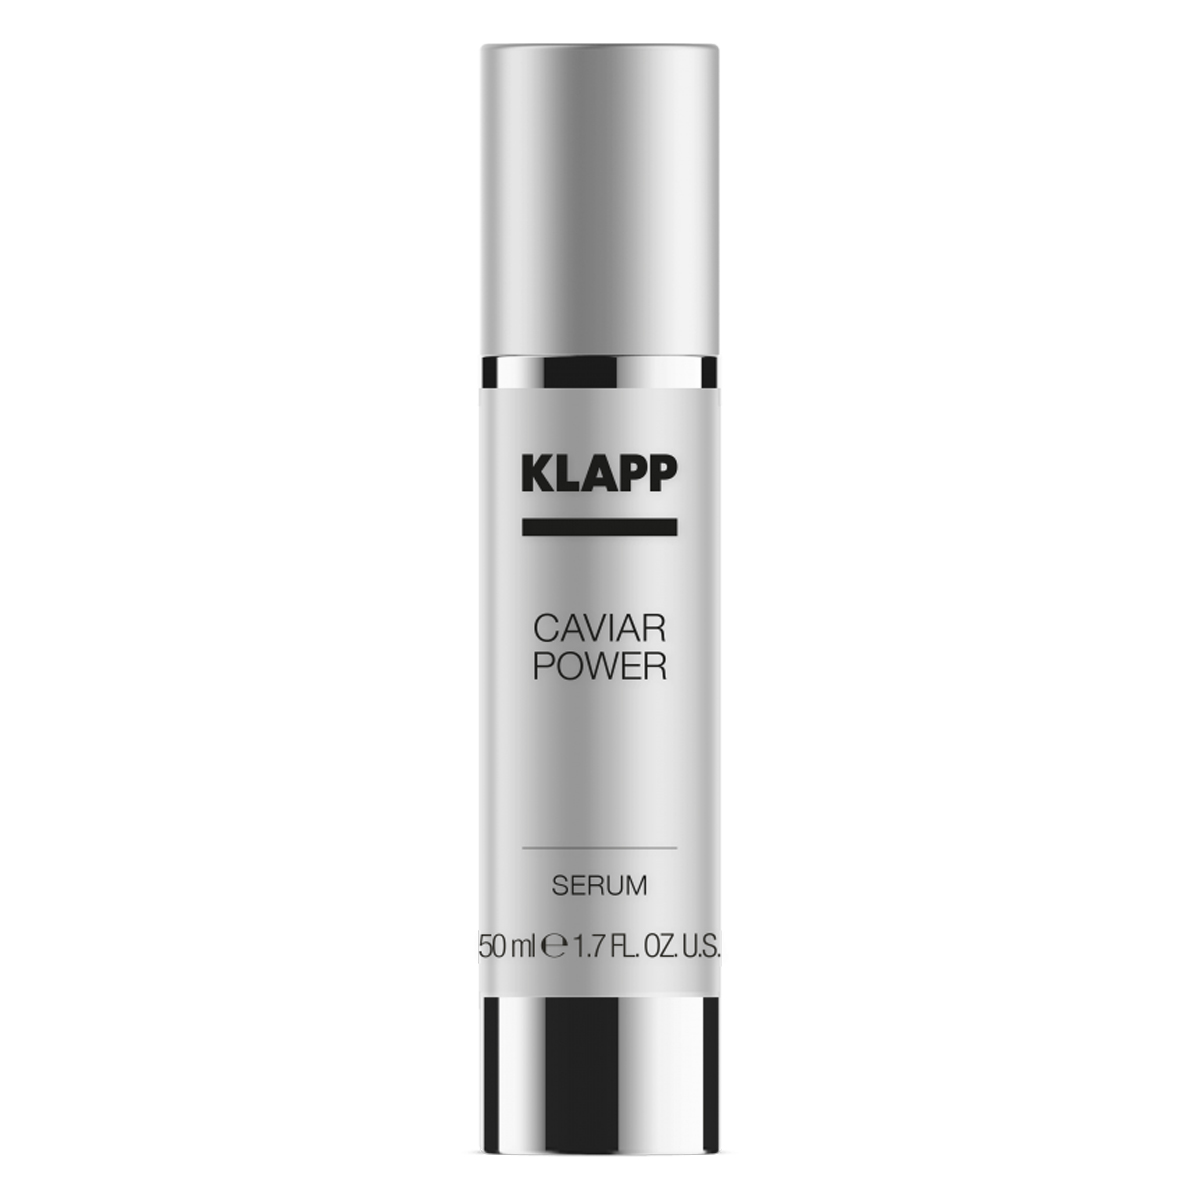 KLAPP Caviar Power Serum 50 ml